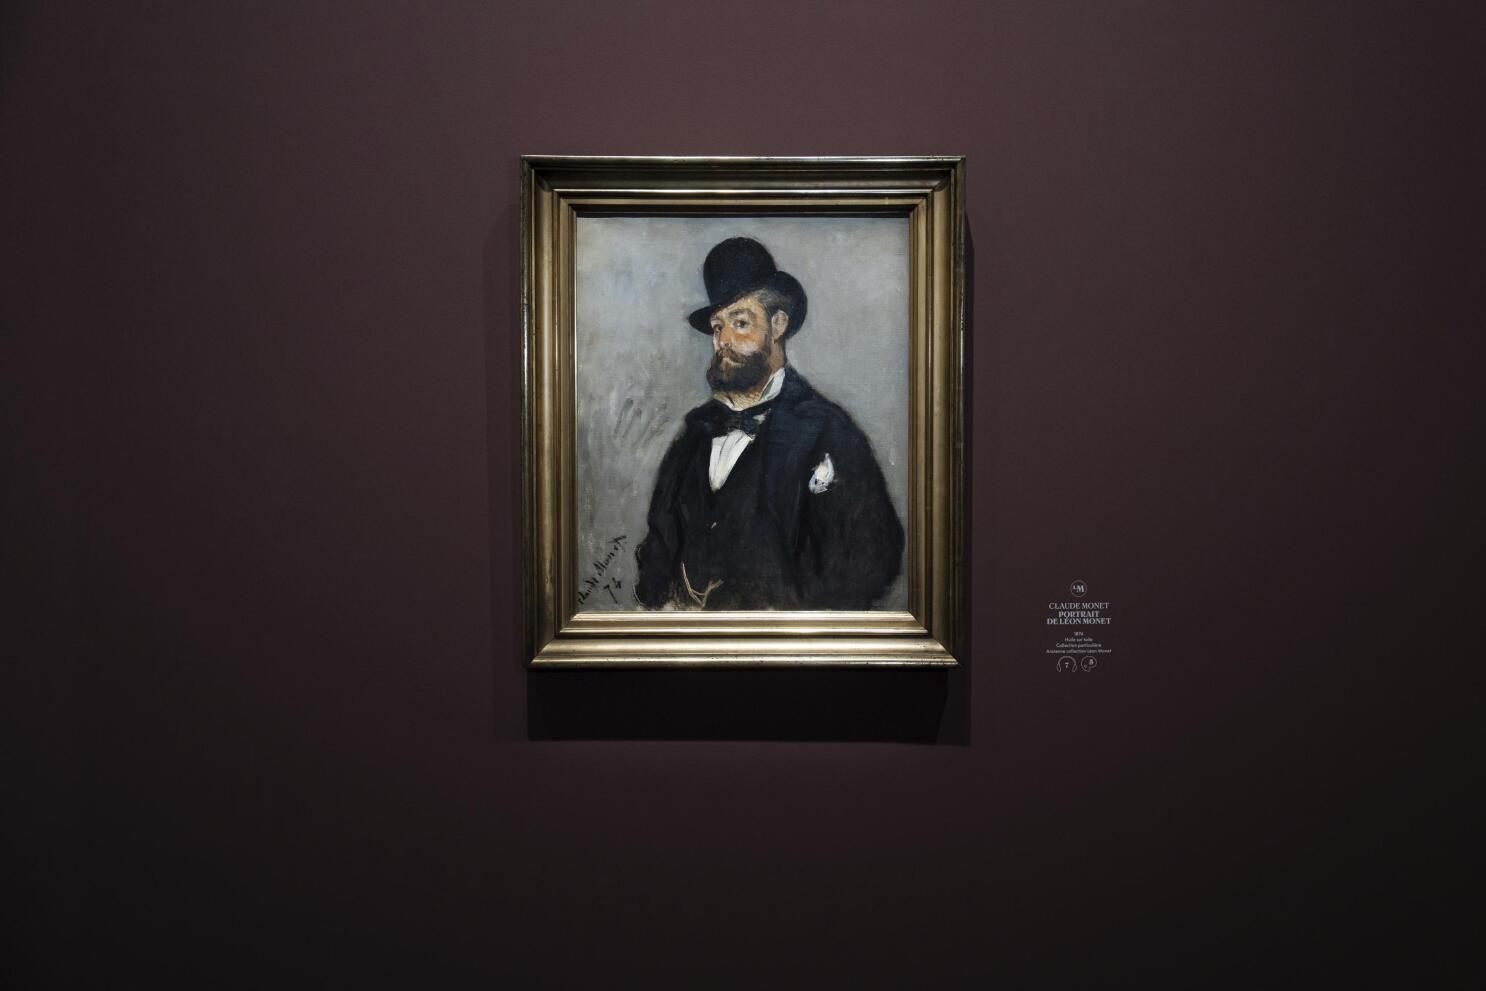 Exhibit: 'Invisible' Monet, Leon, was key to impressionism